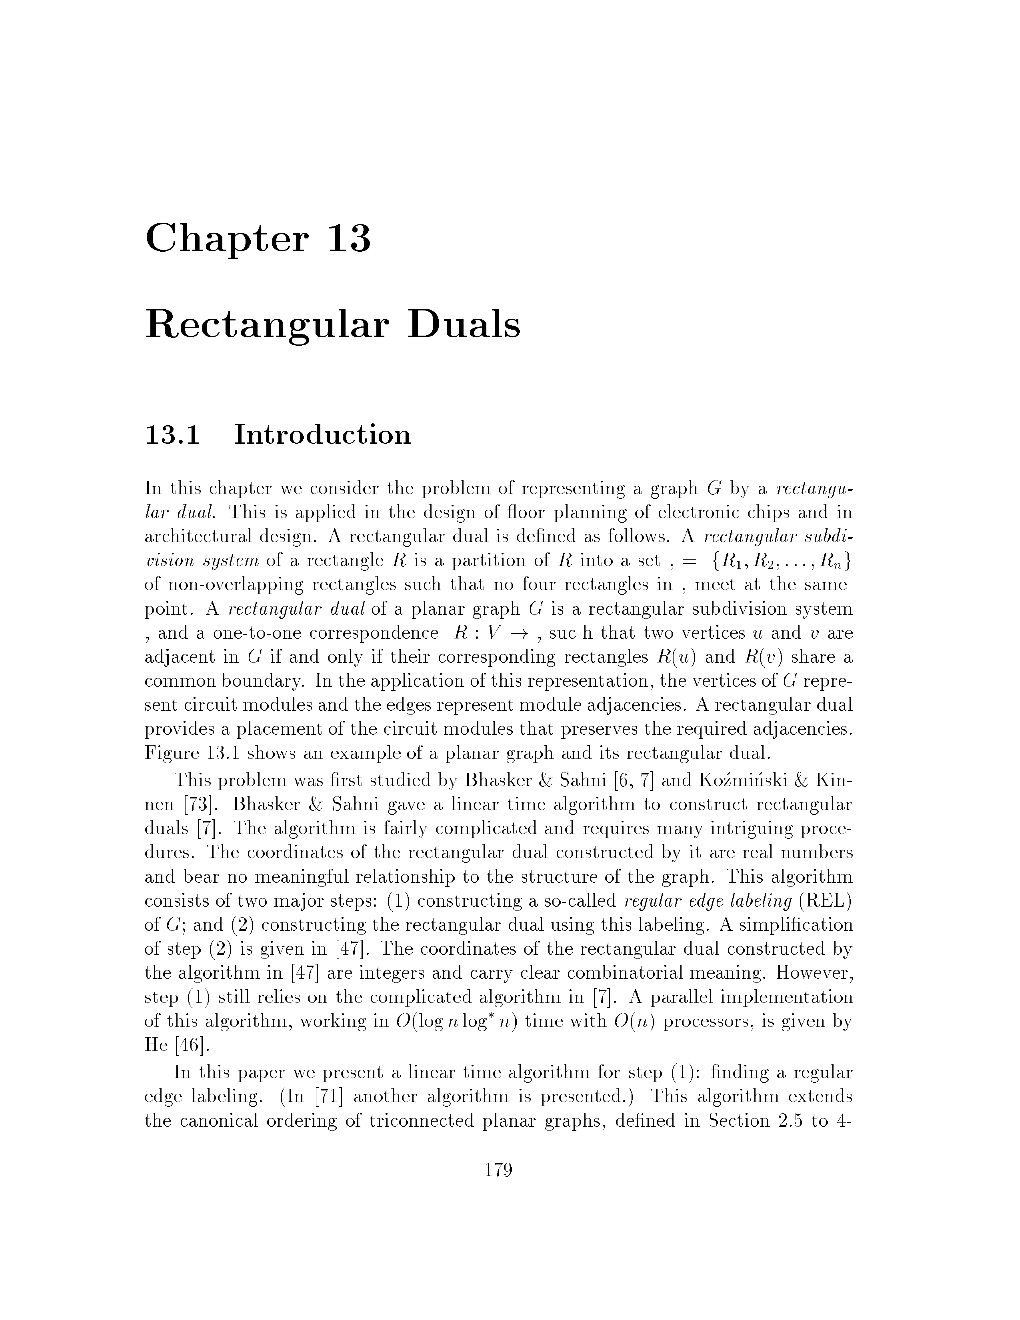 Chapter 13 Rectangular Duals